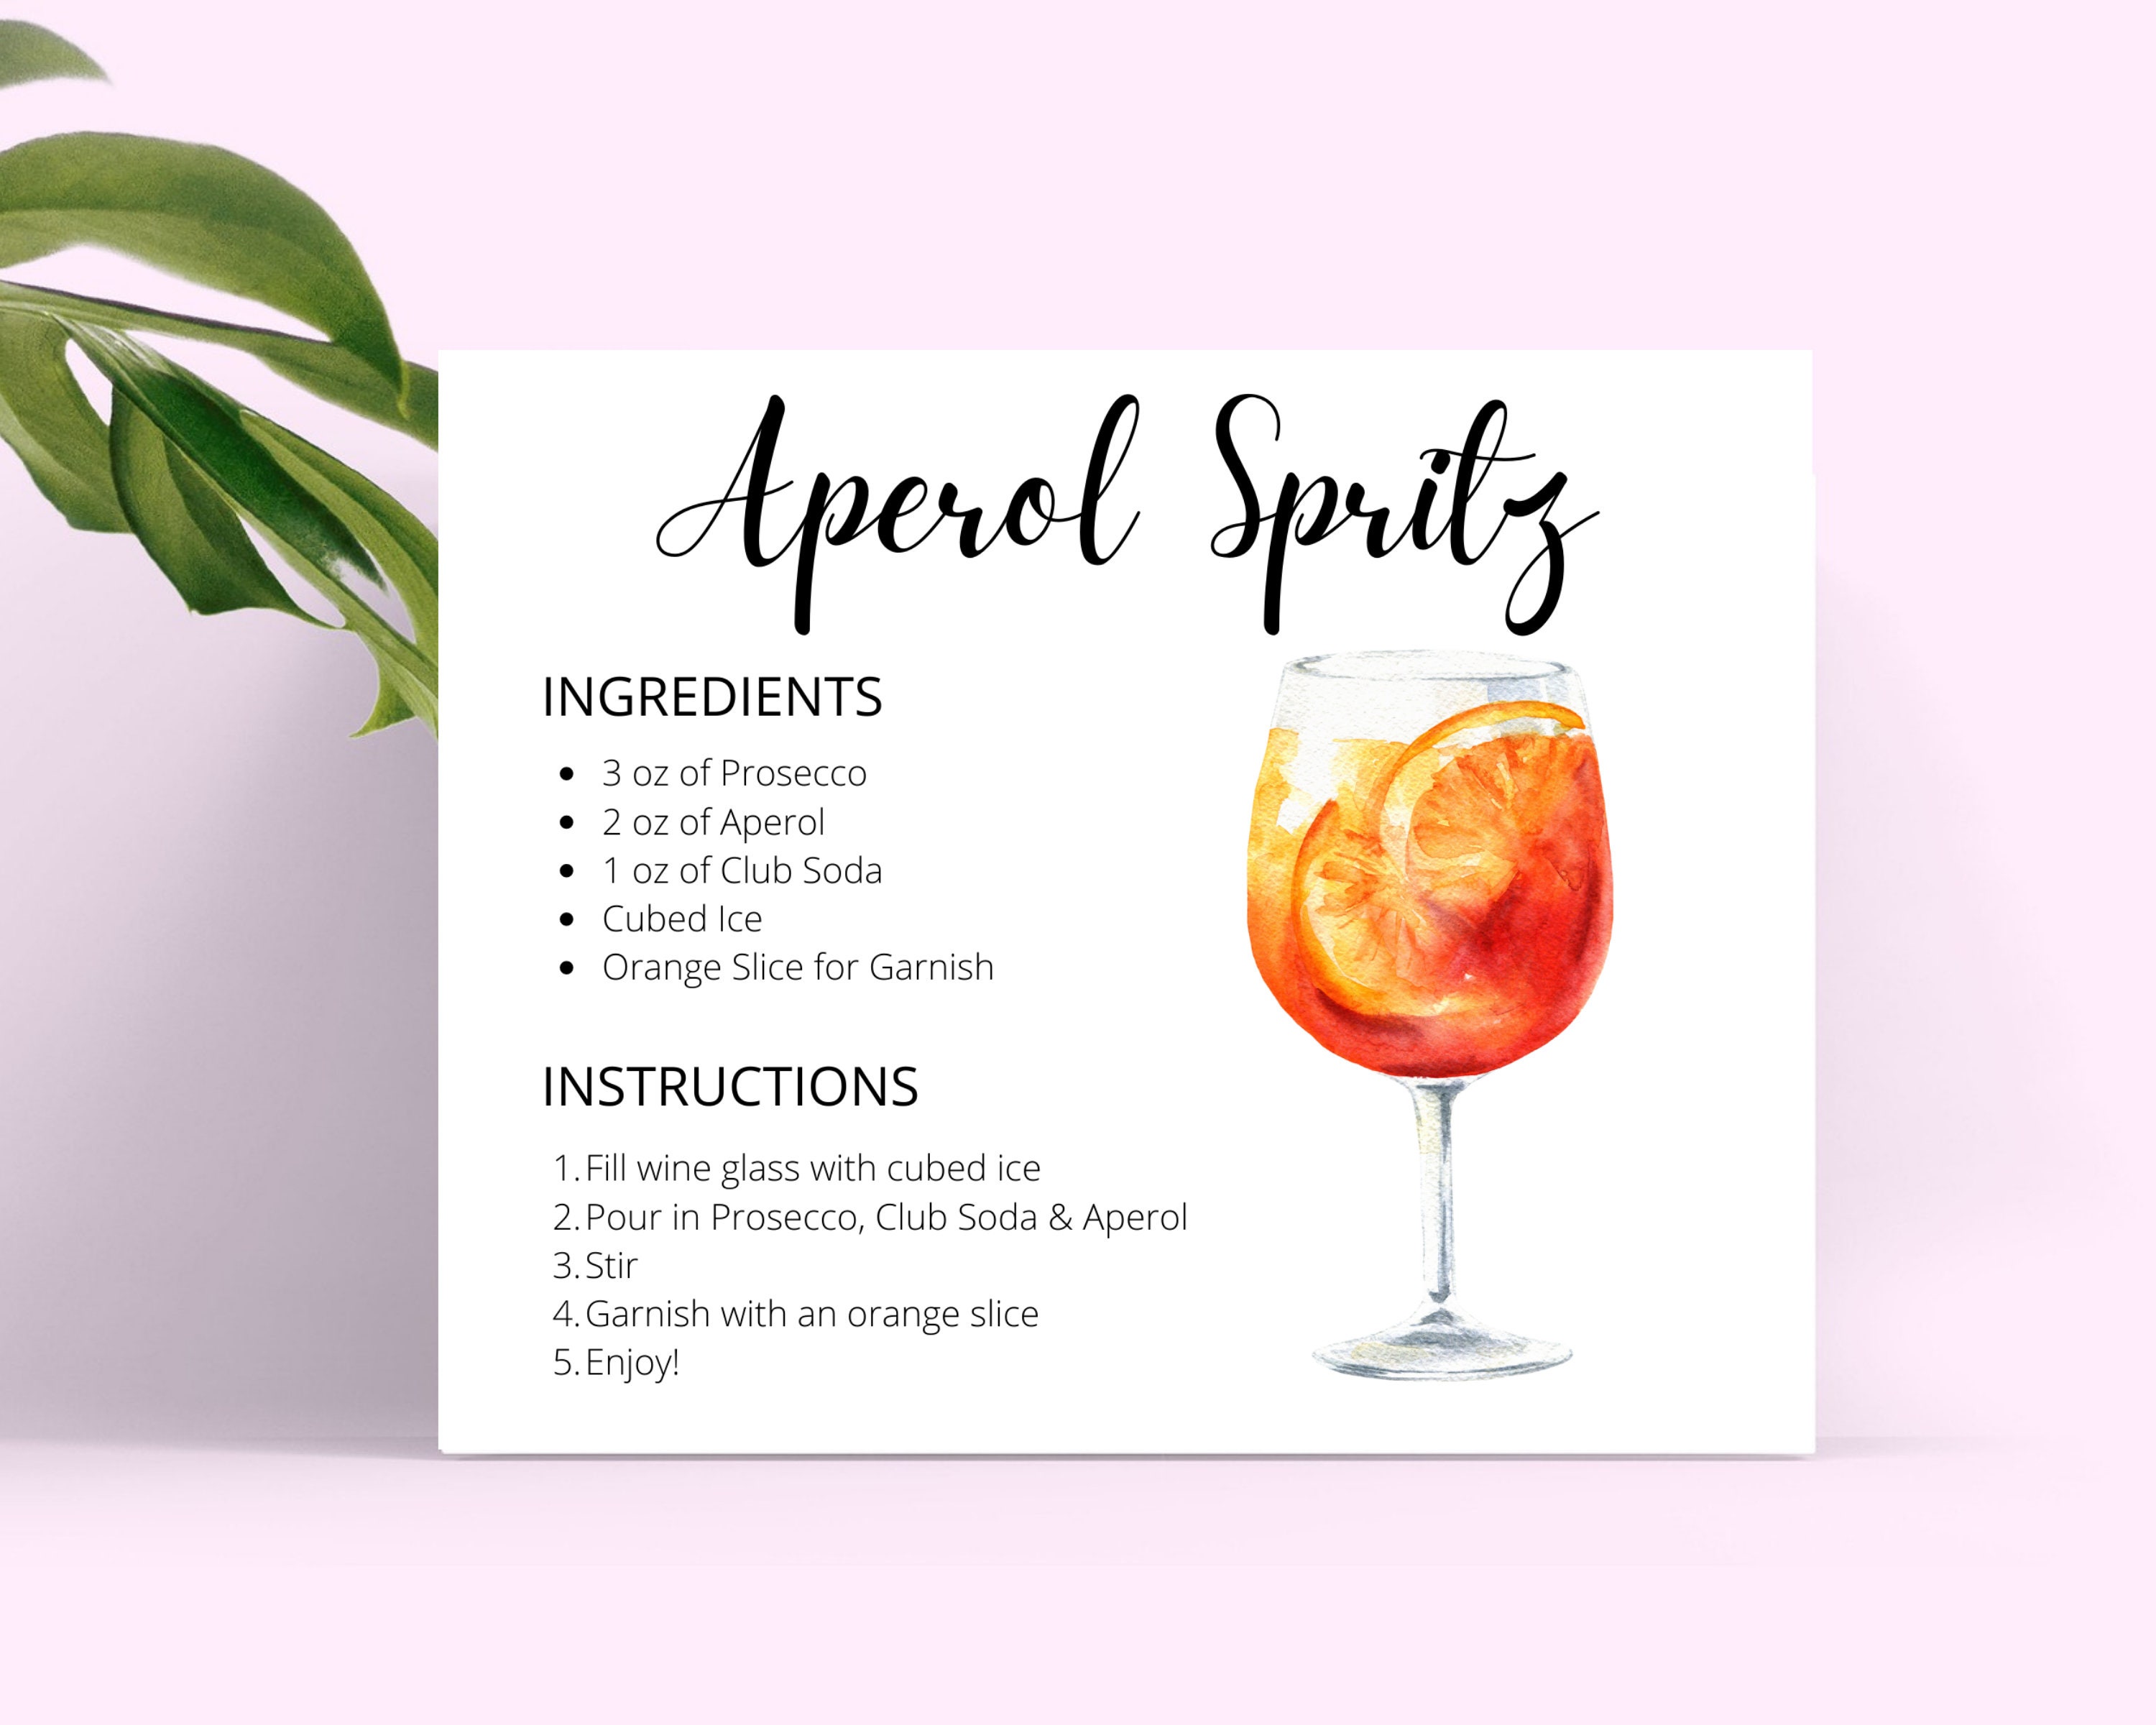 Best Aperol Spritz Recipe - How To Make An Aperol Spritz